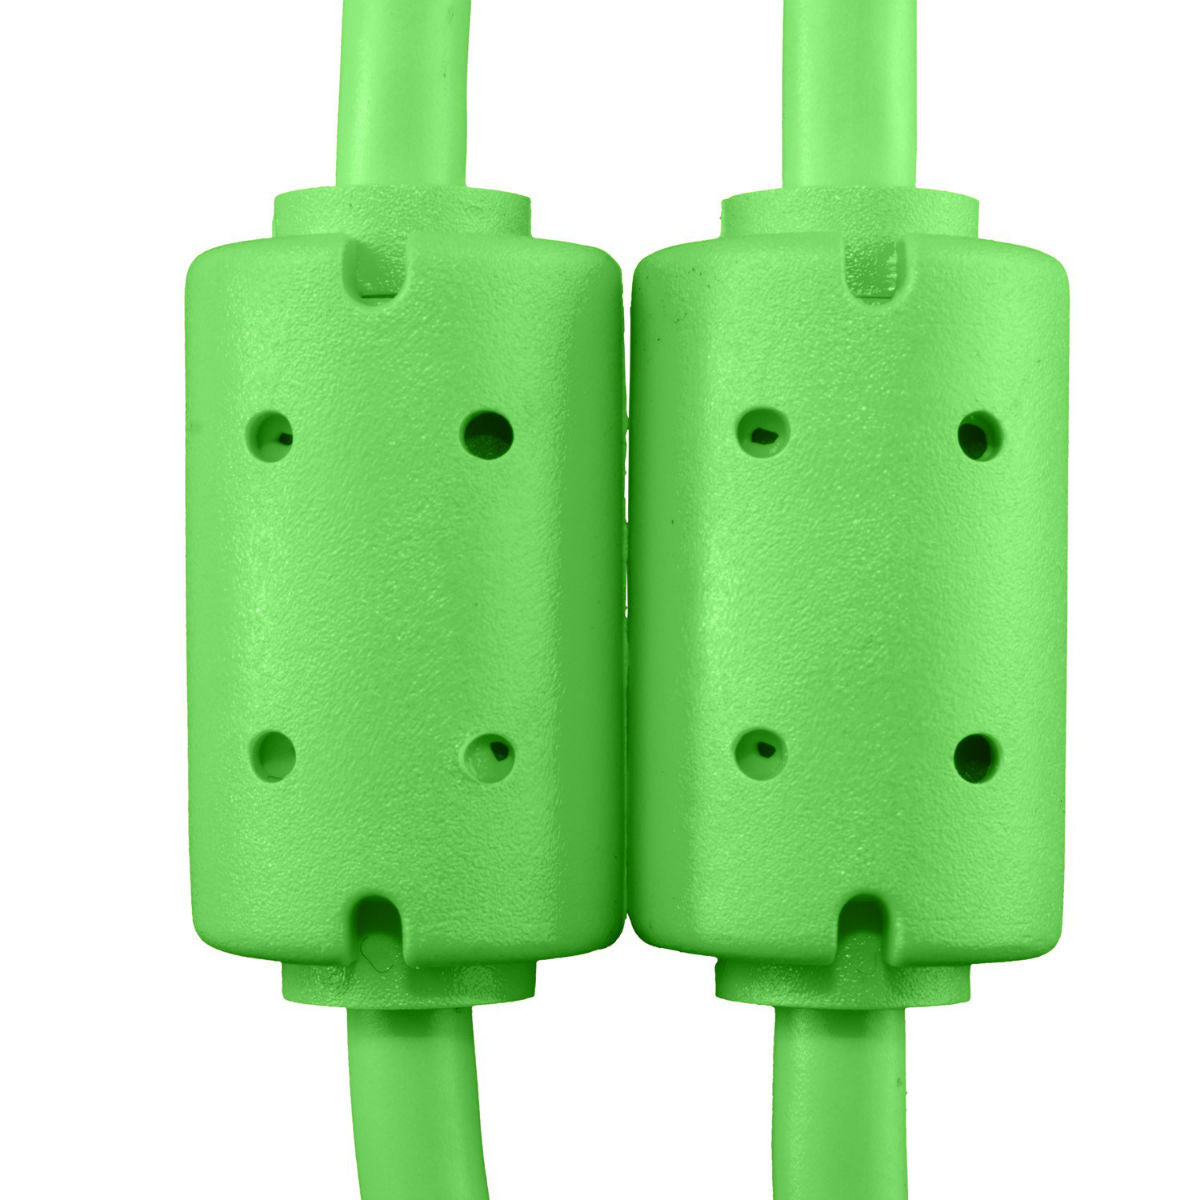 UDG USB Cable A-B 2m Green Angled U95005GR